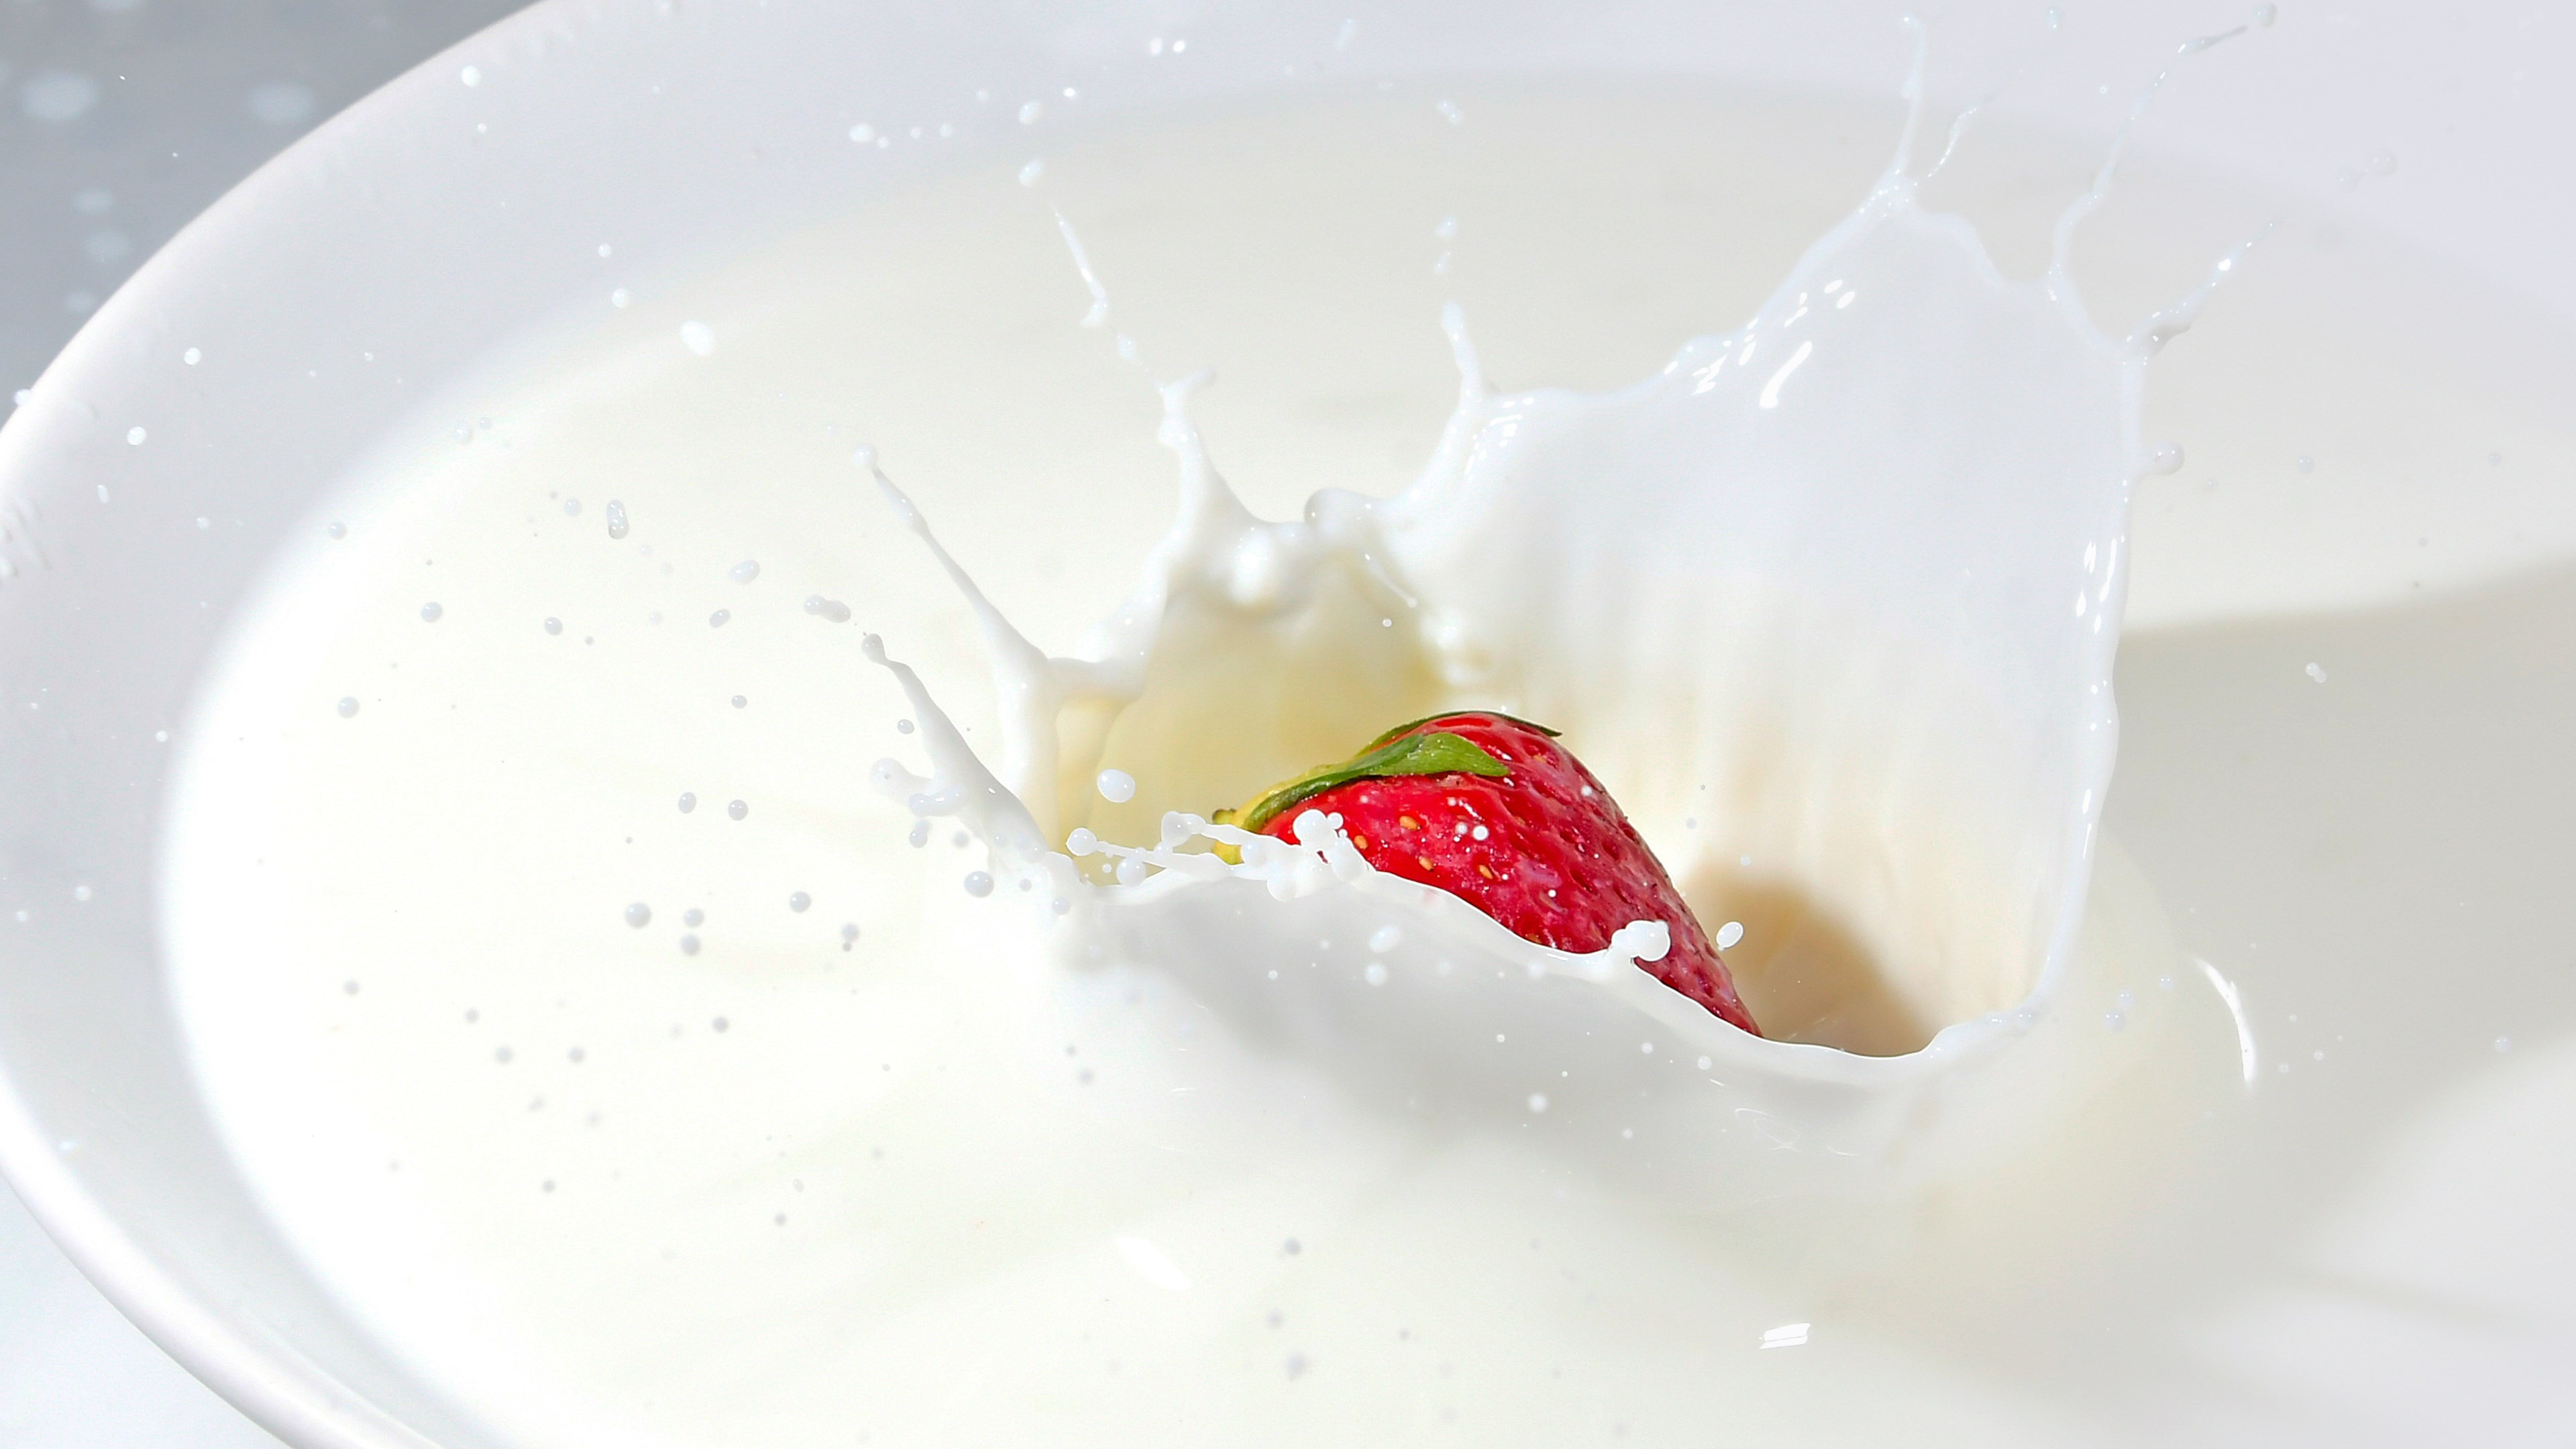 Strawberry splashing in milk wallpaper 3840x2160